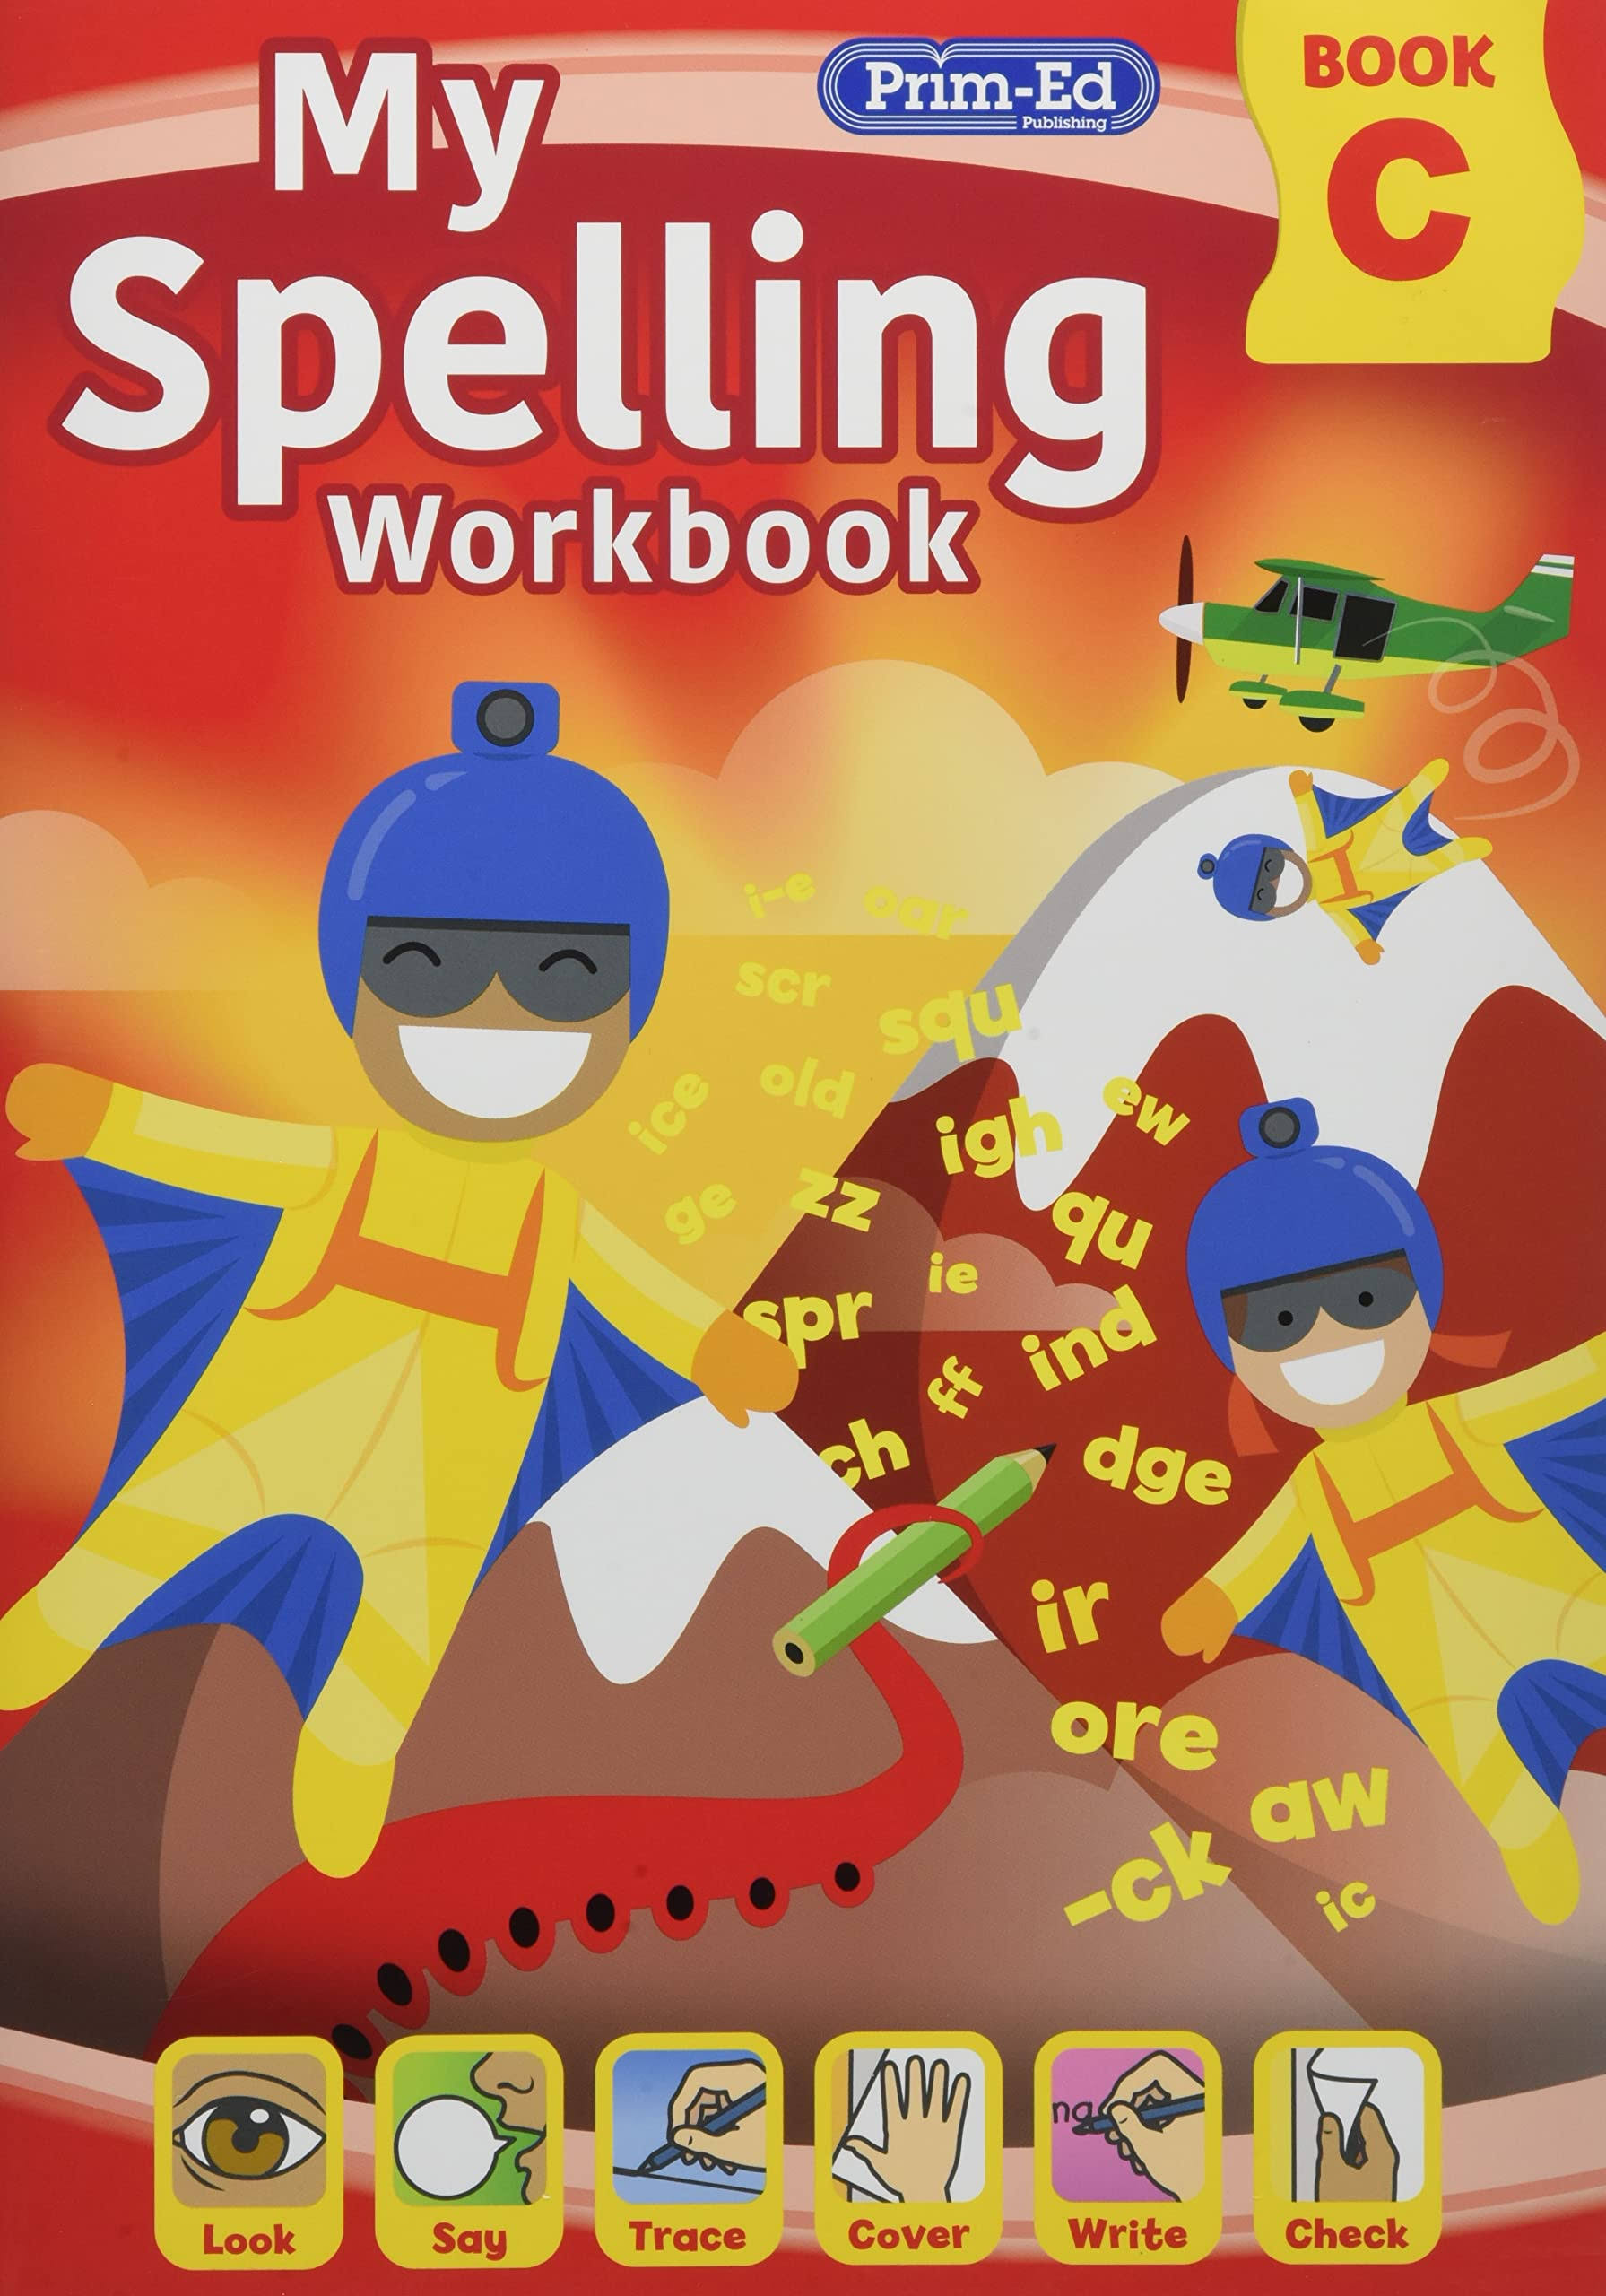 My Spelling Workbook Book C [Book]